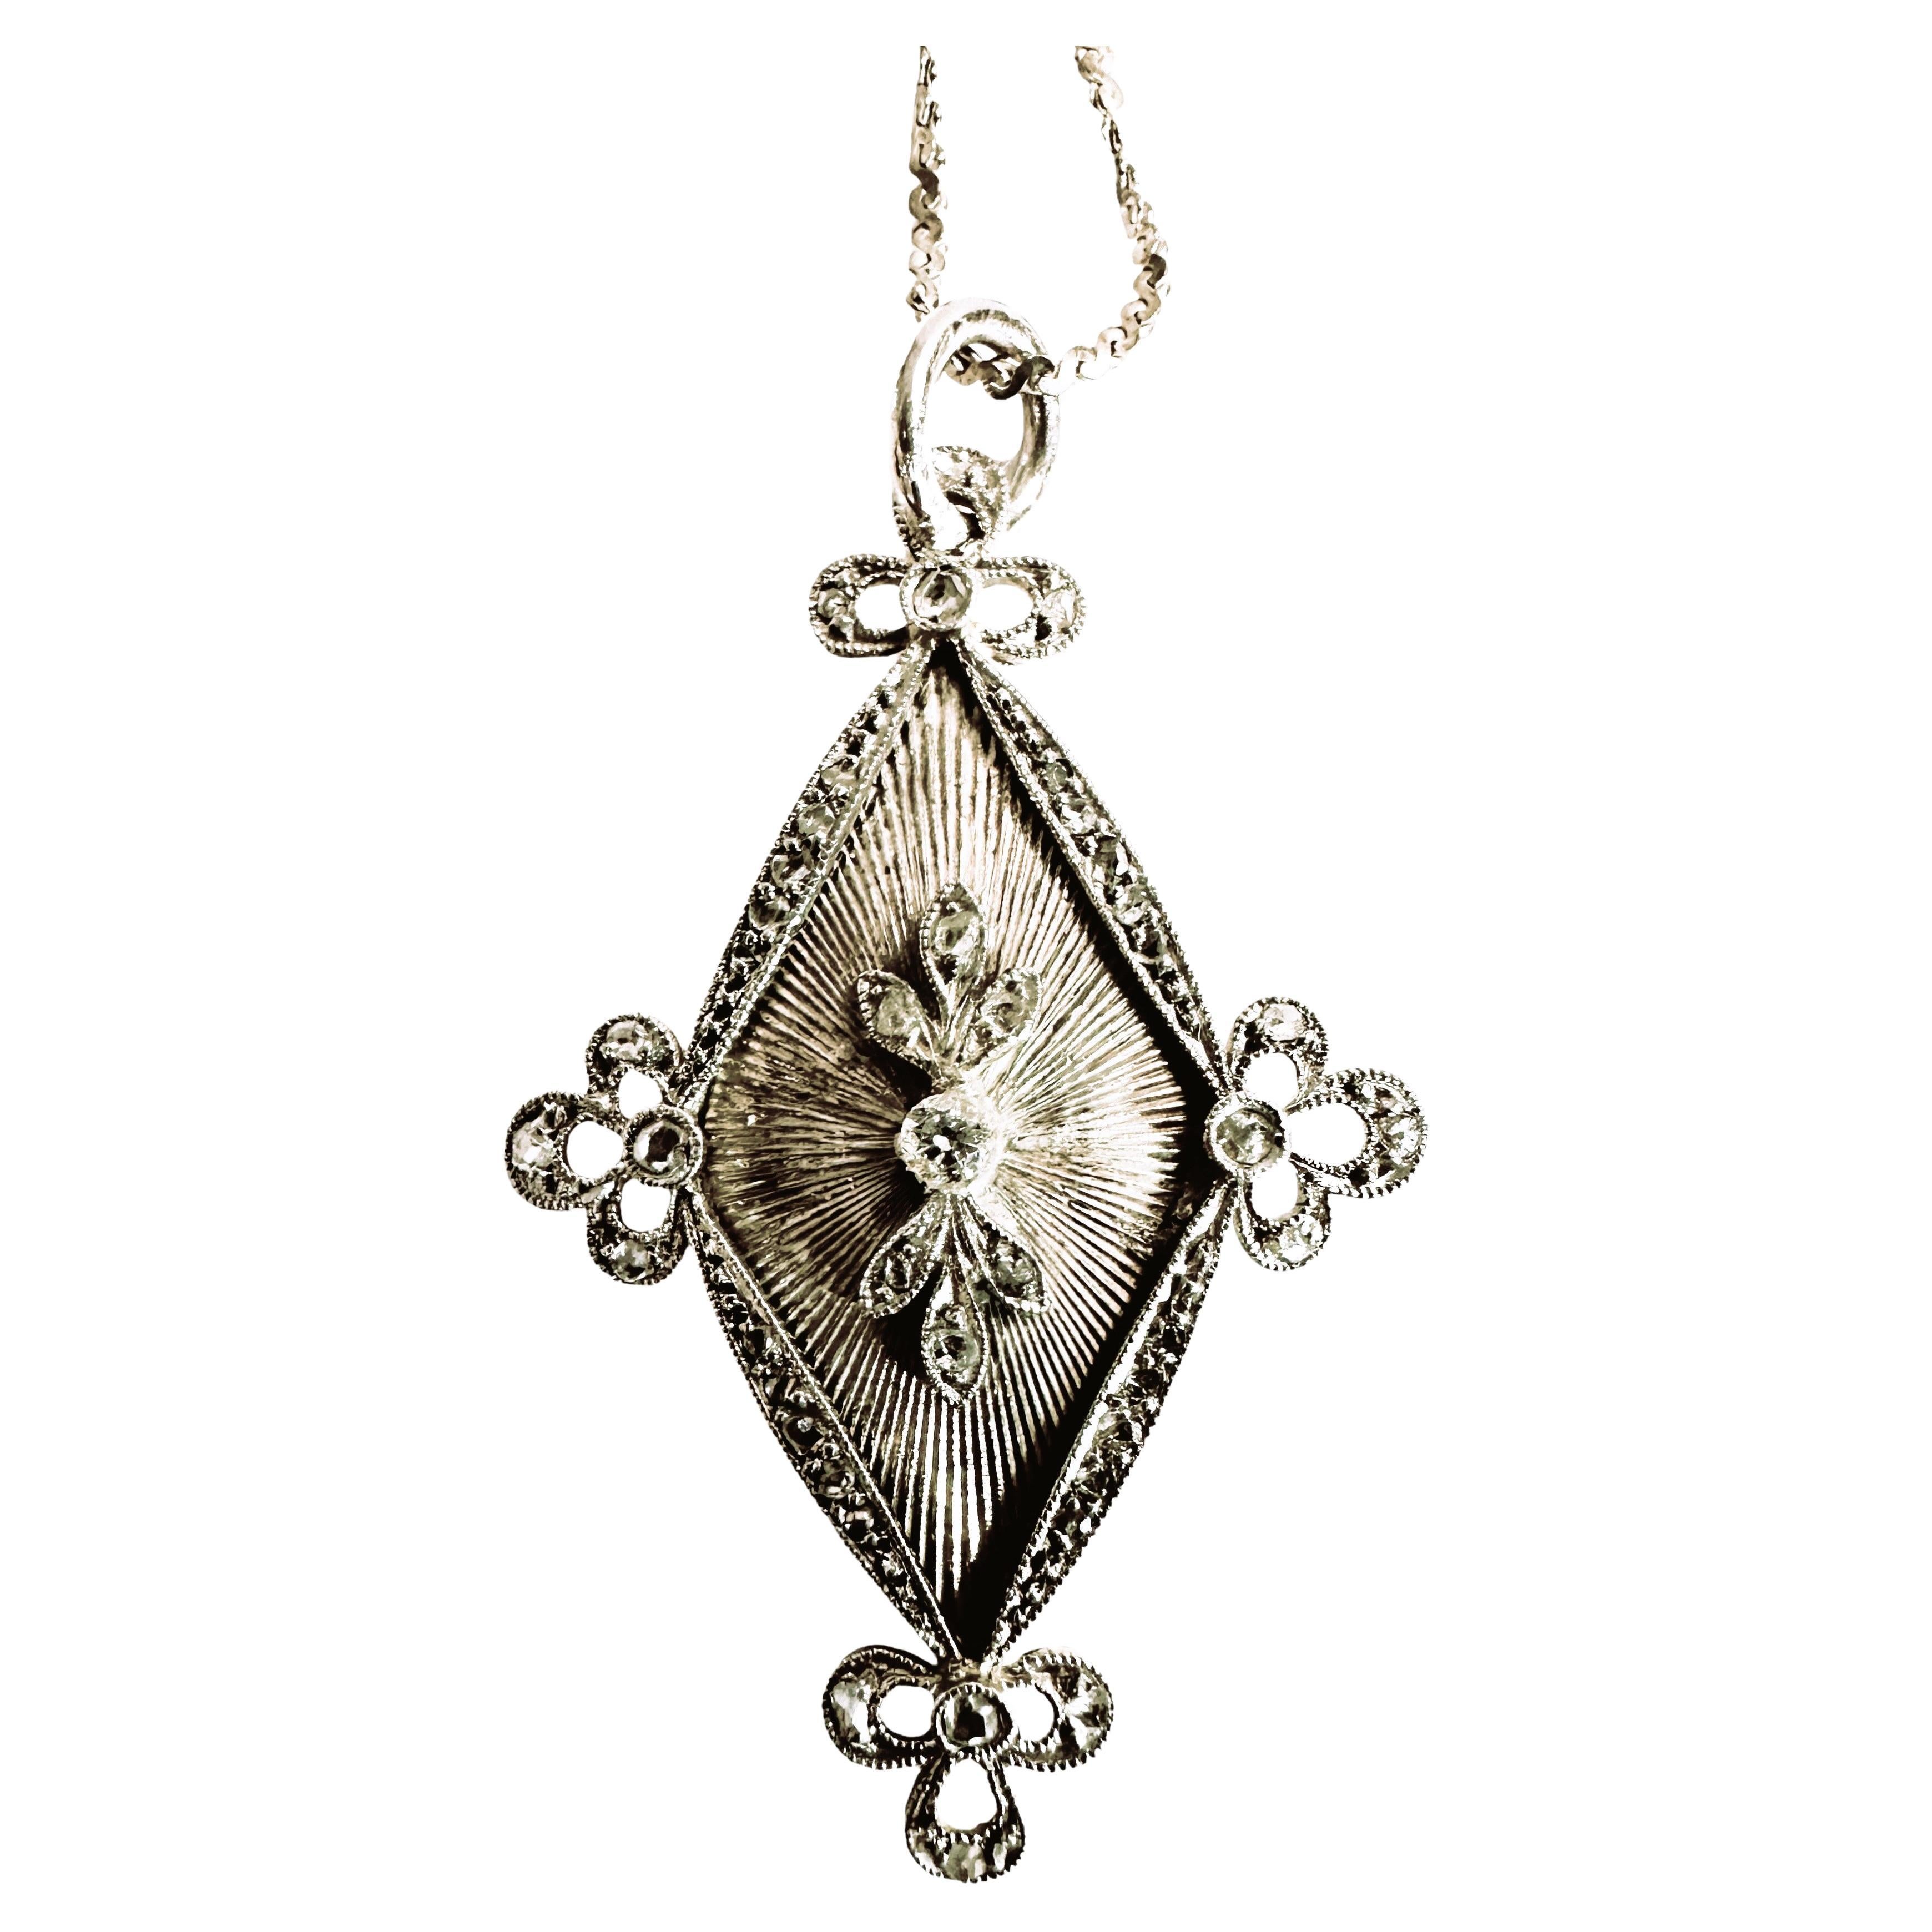 Antique 14k WG Rose Cut & Mine Cut Diamond Pendant w 14k White Gold 18" Chain 